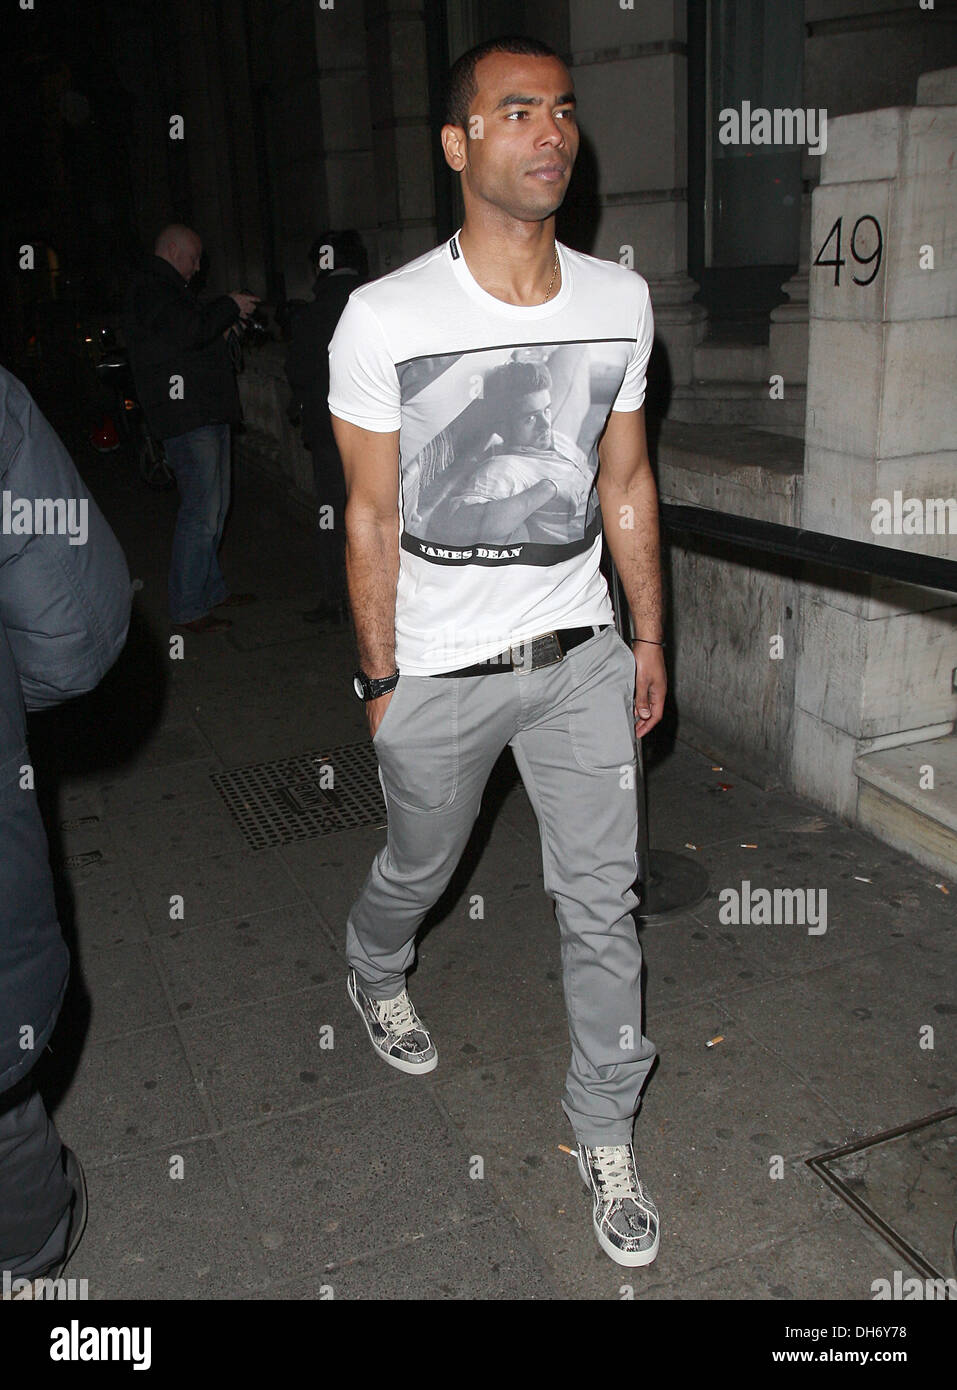 Ashley Cole indossando un James Dean t-shirt arrivies al Aura nightclub  Londra Inghilterra - 15.03.12 Foto stock - Alamy